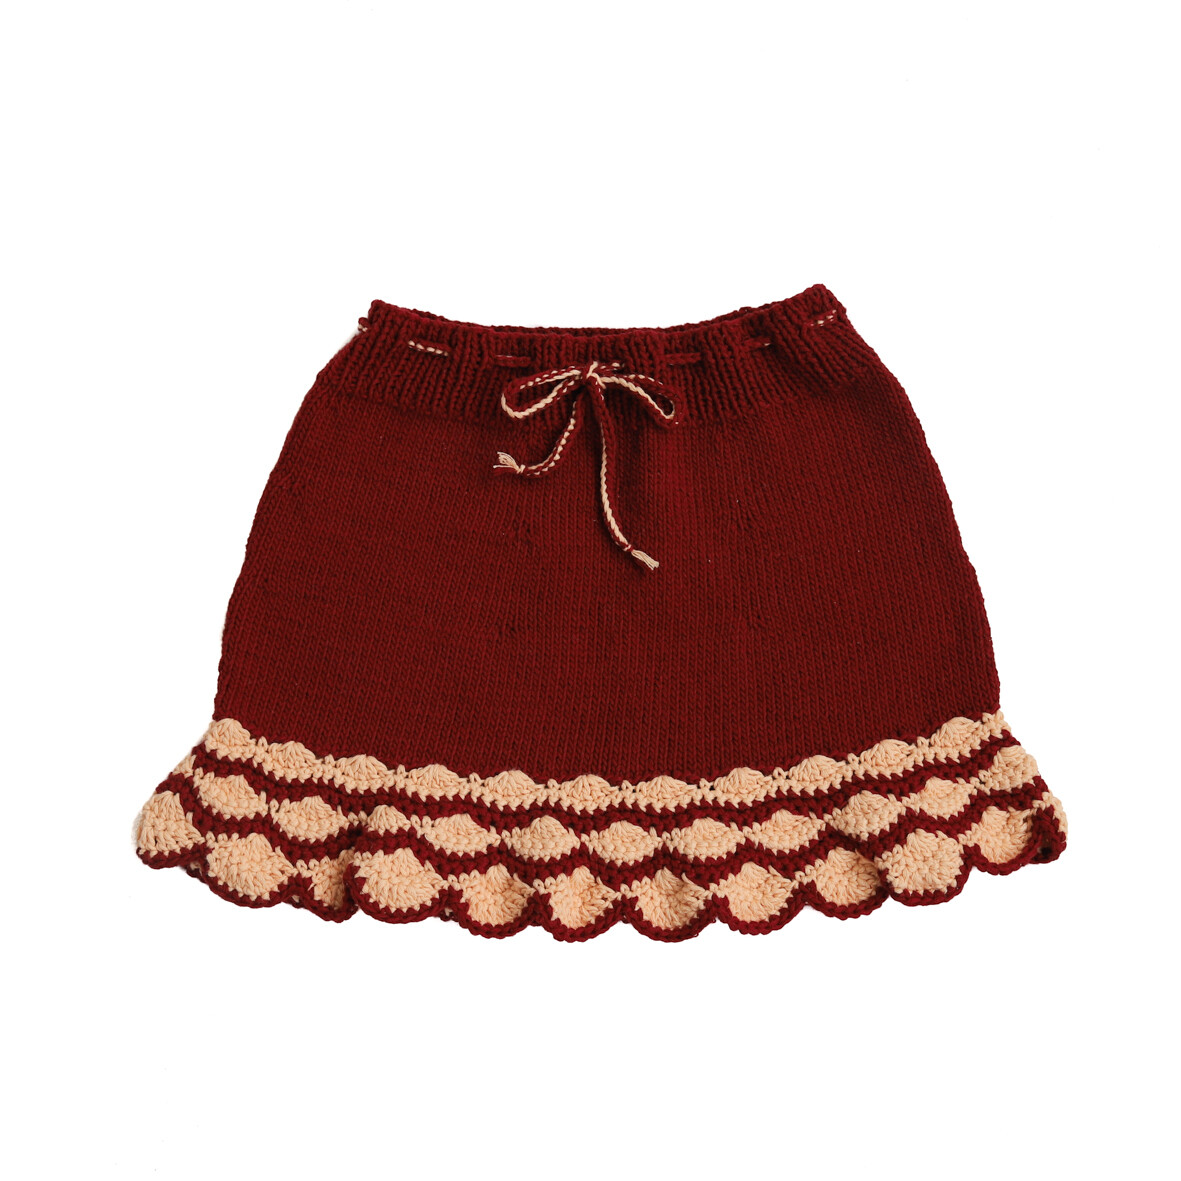 Mila Skirt, Color: Ruby-Peach, Size: 4-6